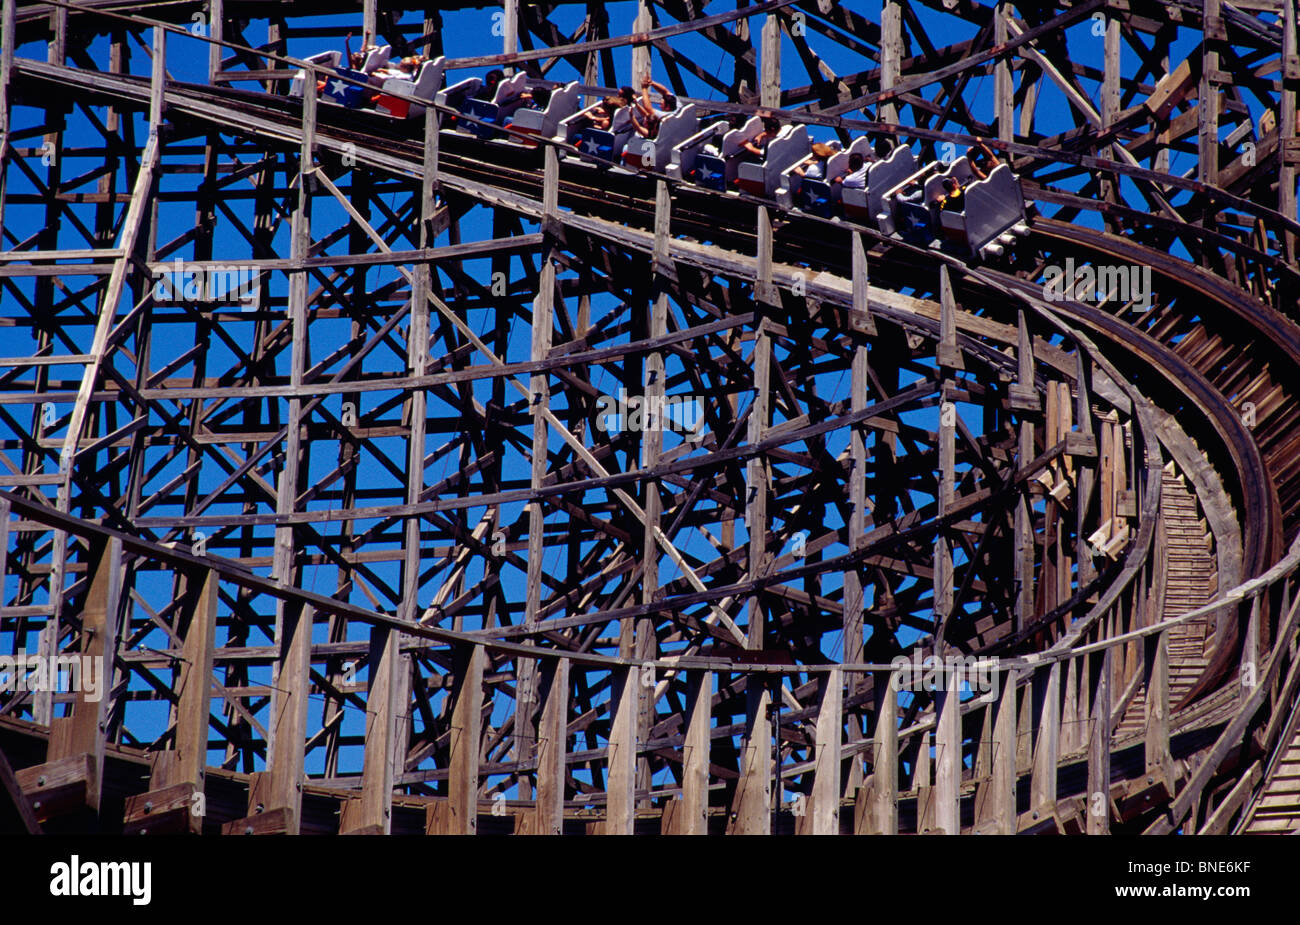 USA, Texas, Dallas, Six Flags Over Texas amusement park, ride on Roller Coaster Stock Photo